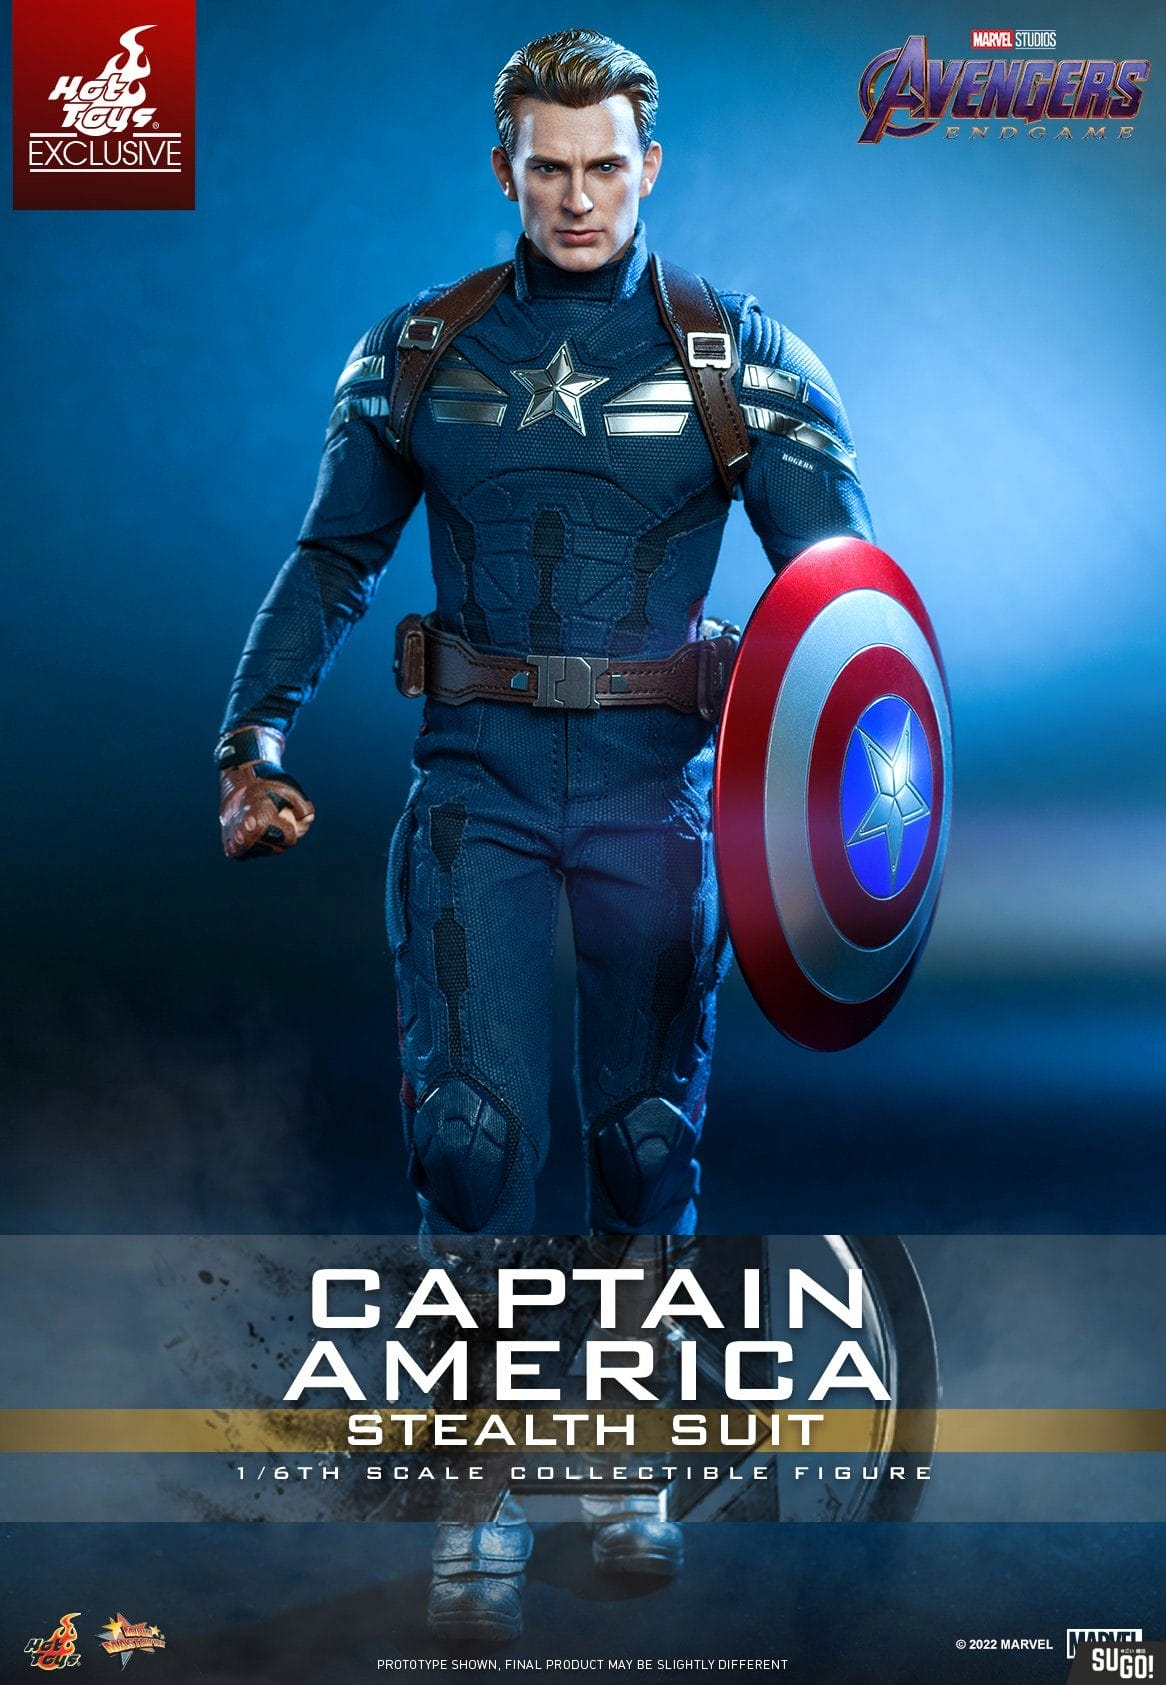 Captain America Costumes - Adult, Kids, Woman Captain America Costumes